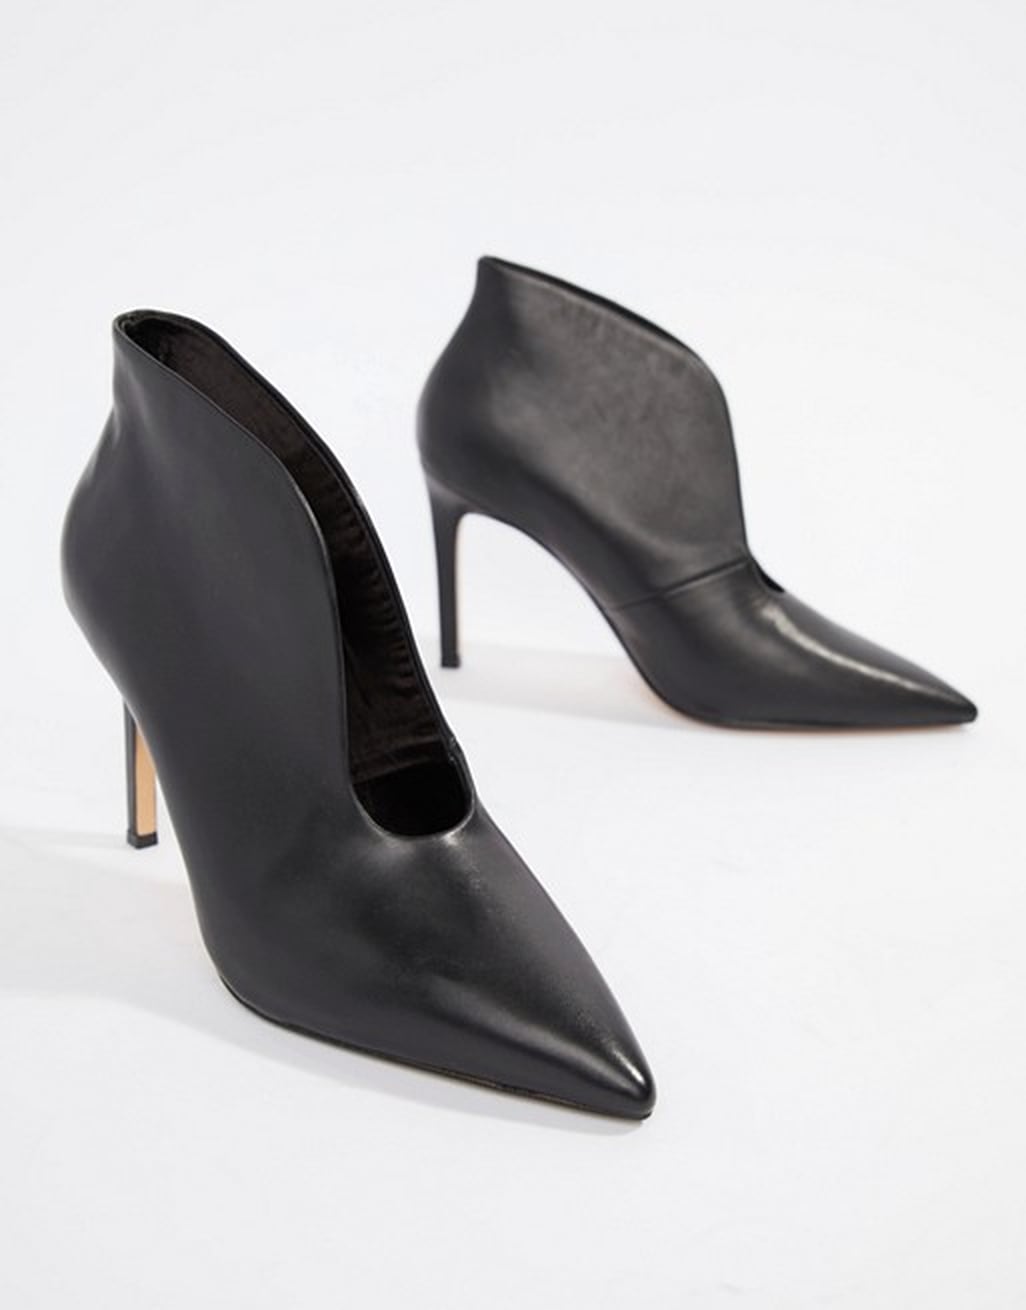 Meghan Markle Black Givenchy Ankle Boots | POPSUGAR Fashion